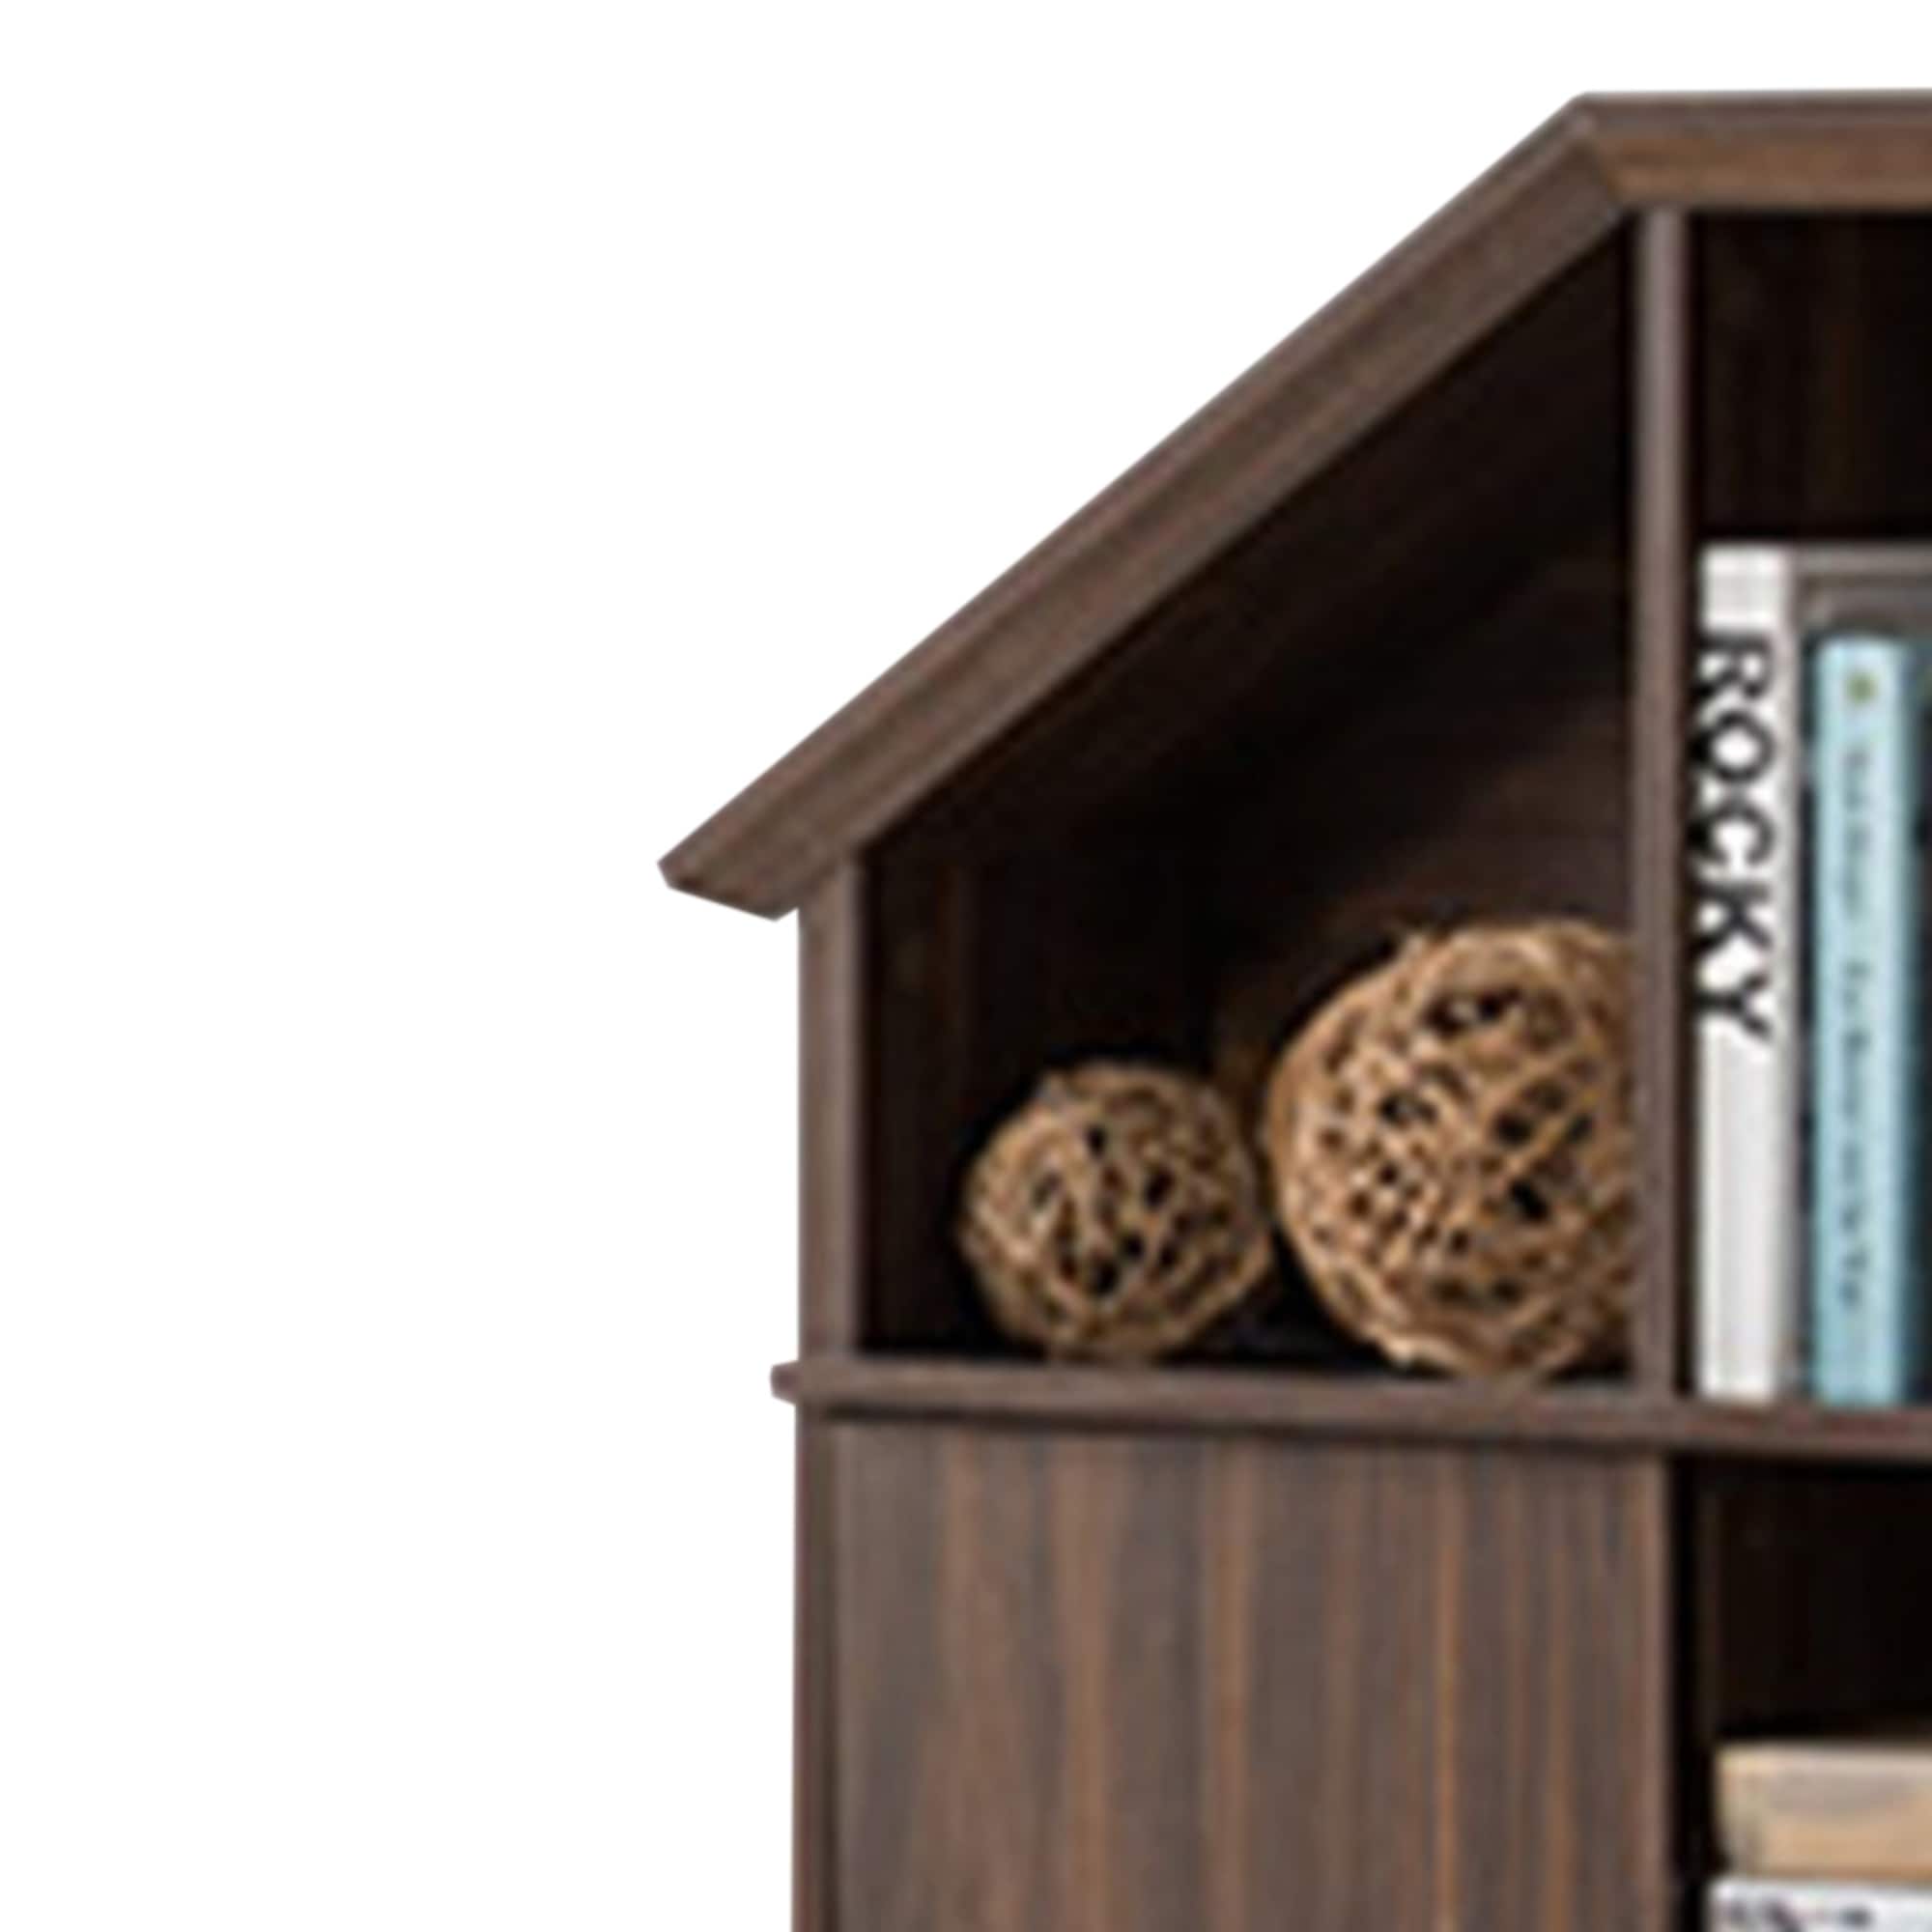 Benzara Twin Size Hut Style Bookcase Headboard In Wood, Dark Walnut Brown - image 5 of 5